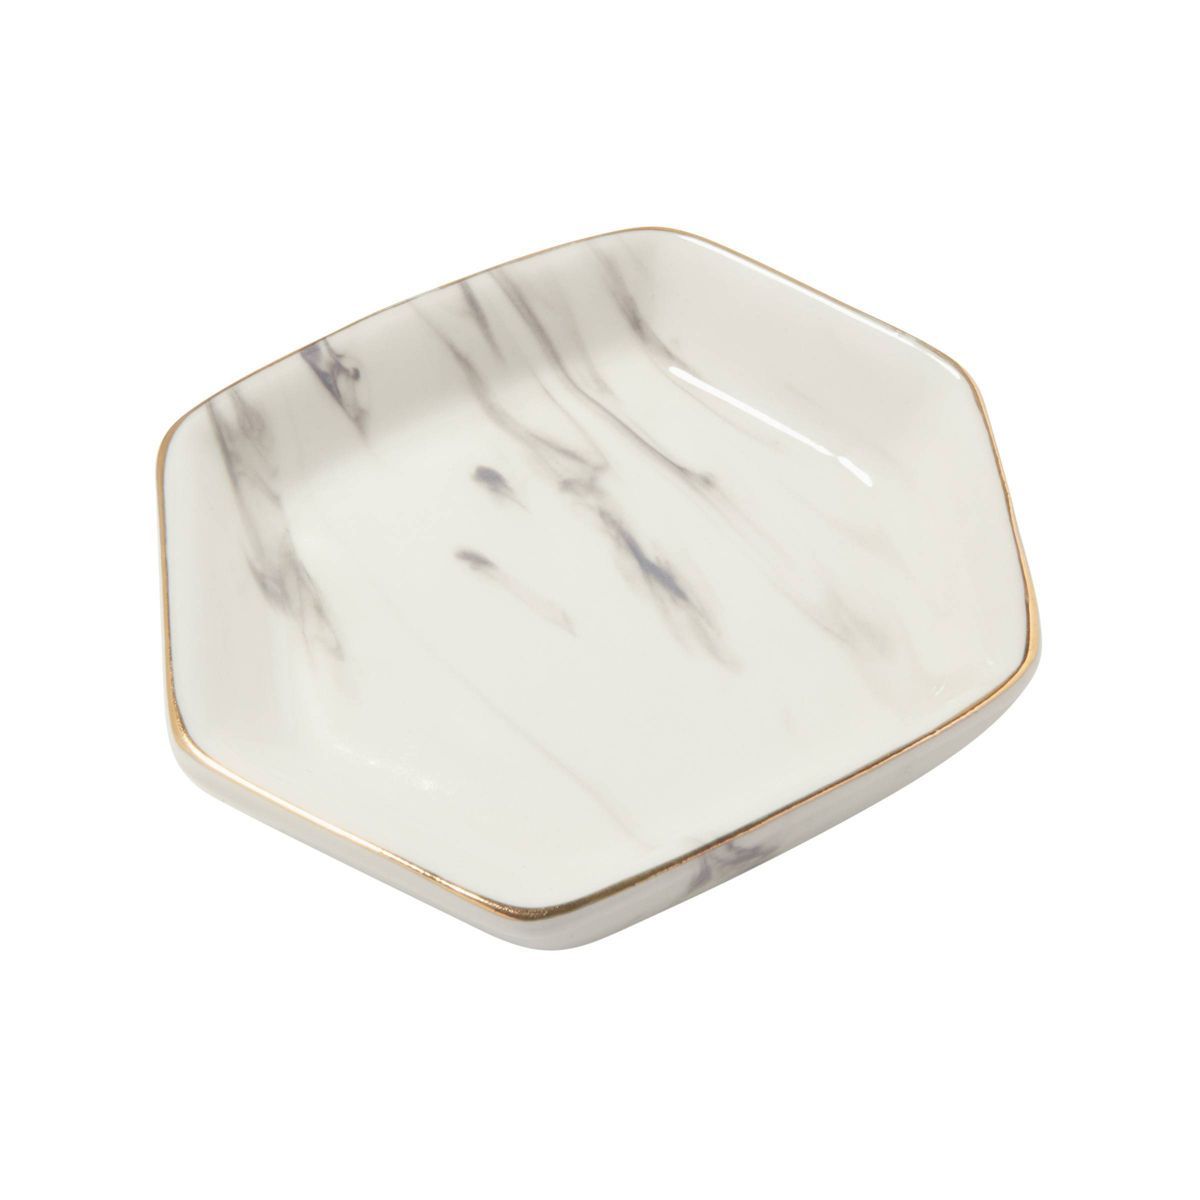 Kendra Scott Ceramic Liesel Ring Dish Jewelry Tray - White/Gray | Target